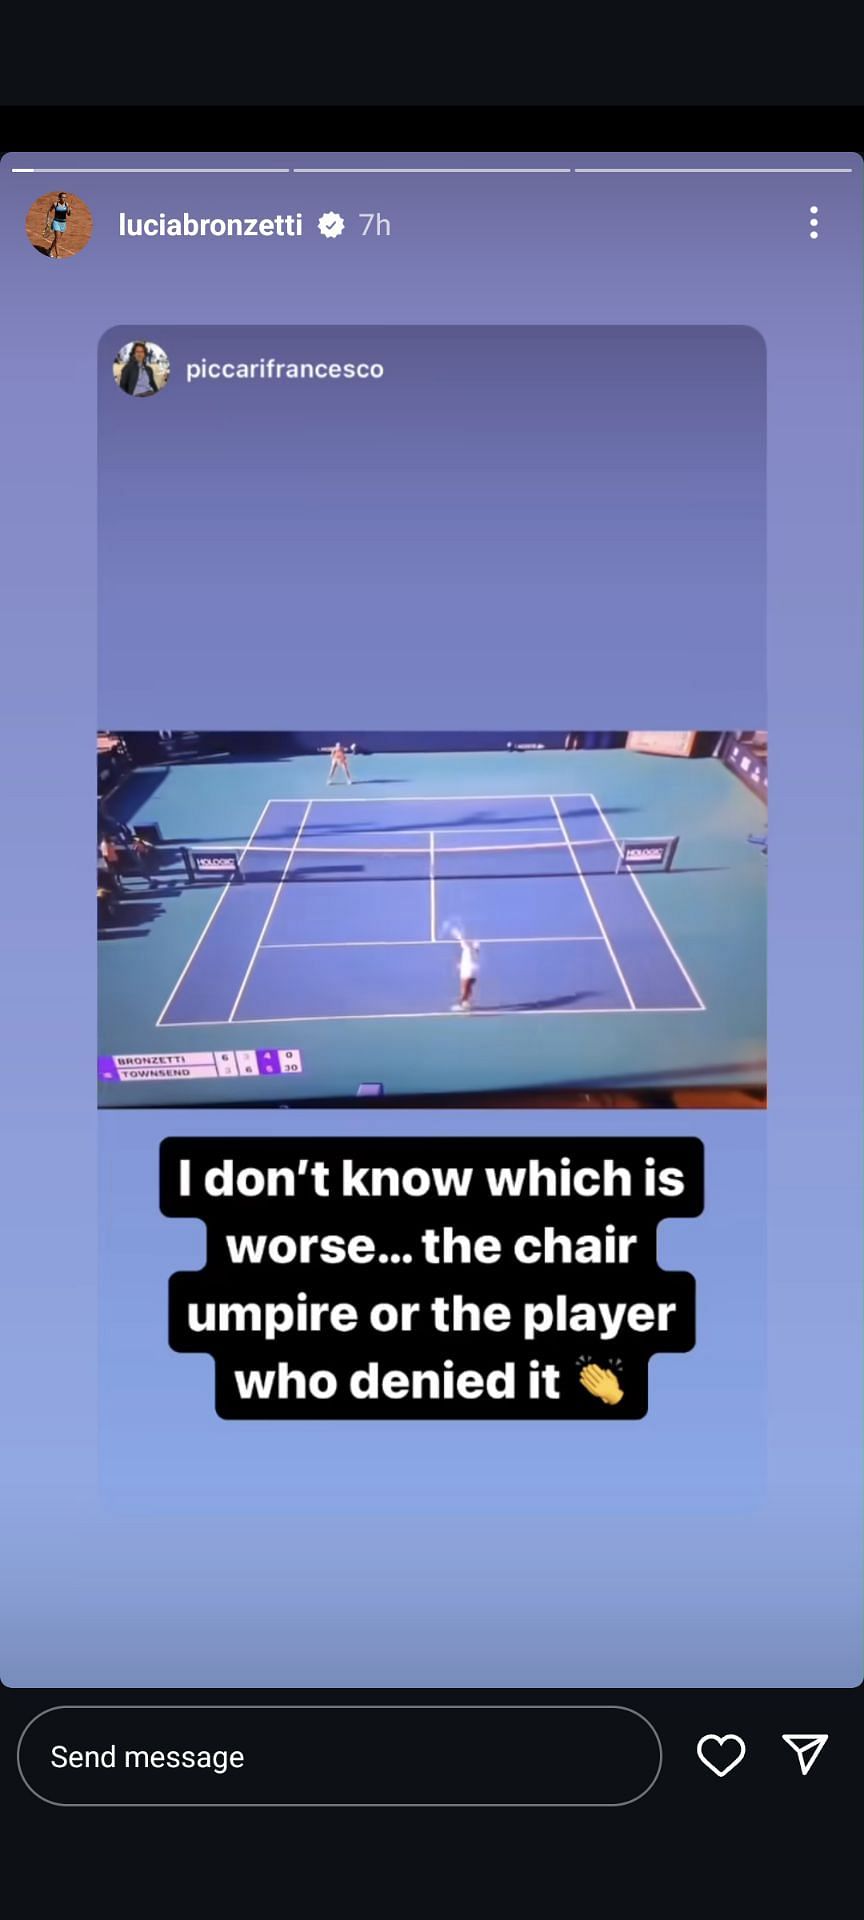 Tennis news: Lucia Bronzetti on her Instagram Story